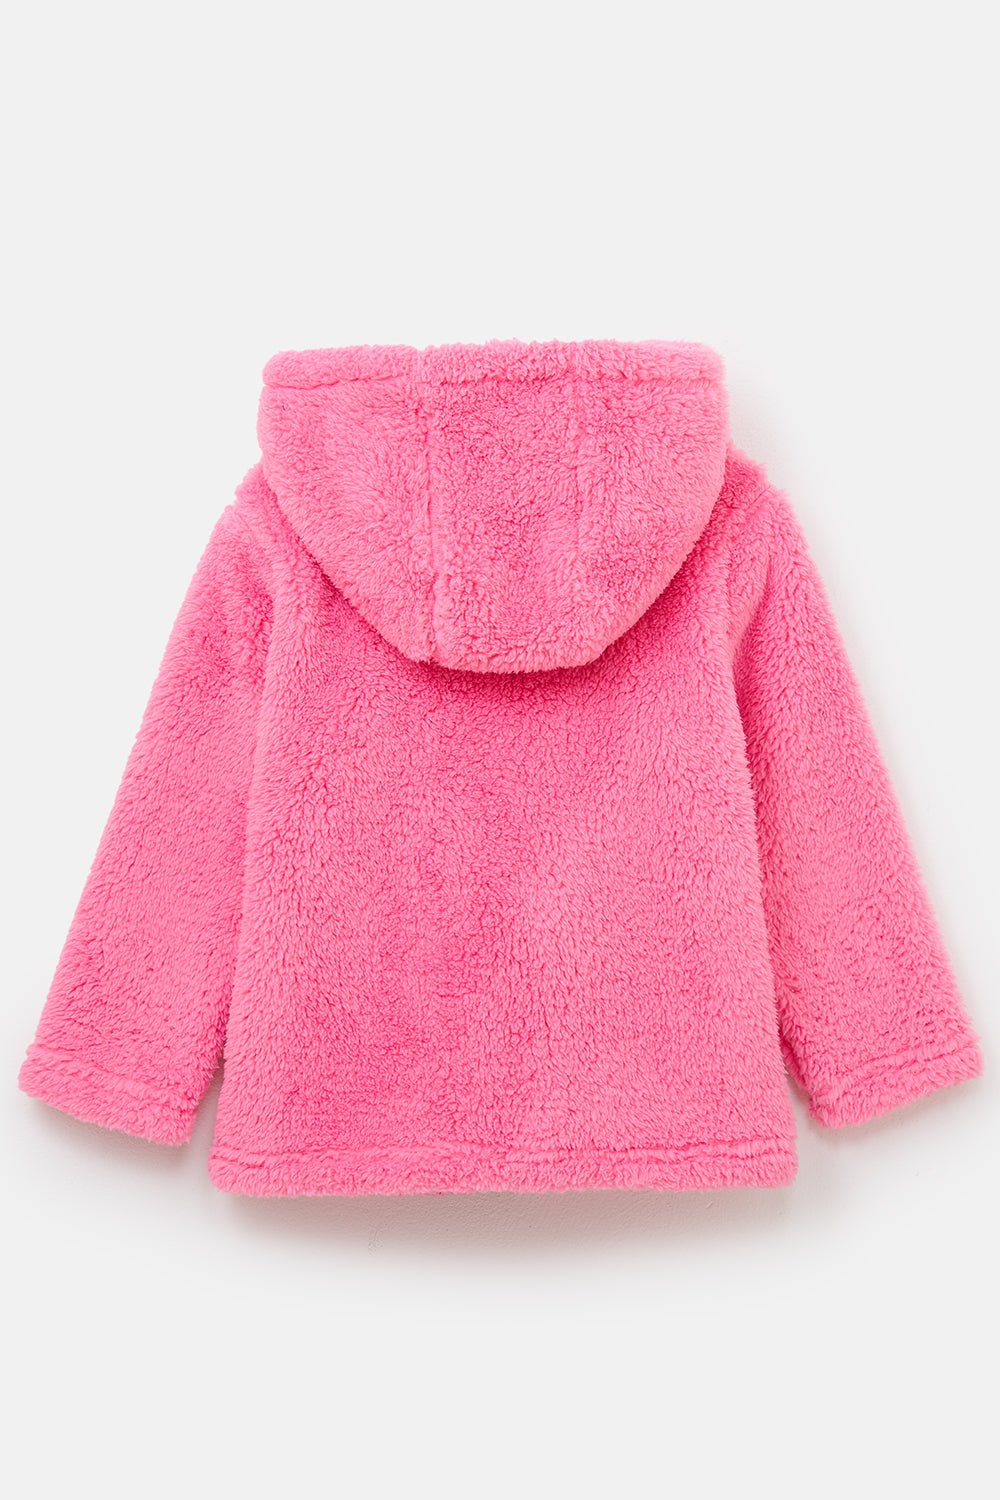 Gracie Sherpa Fleece - Blush Pink